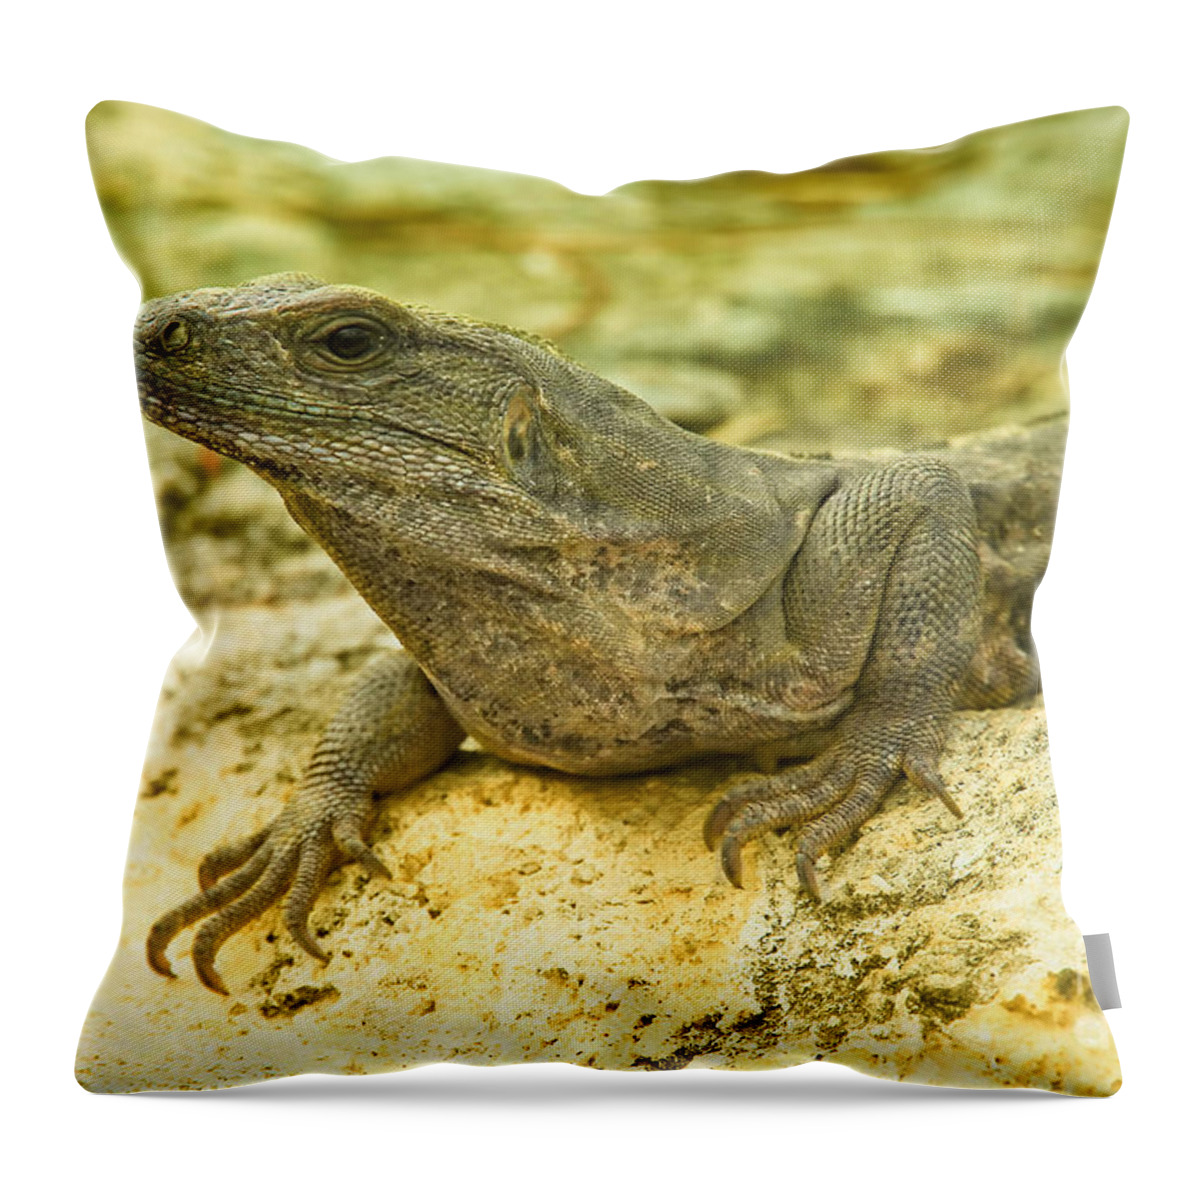 Animal Throw Pillow featuring the photograph Iguana 2 by Teresa Zieba